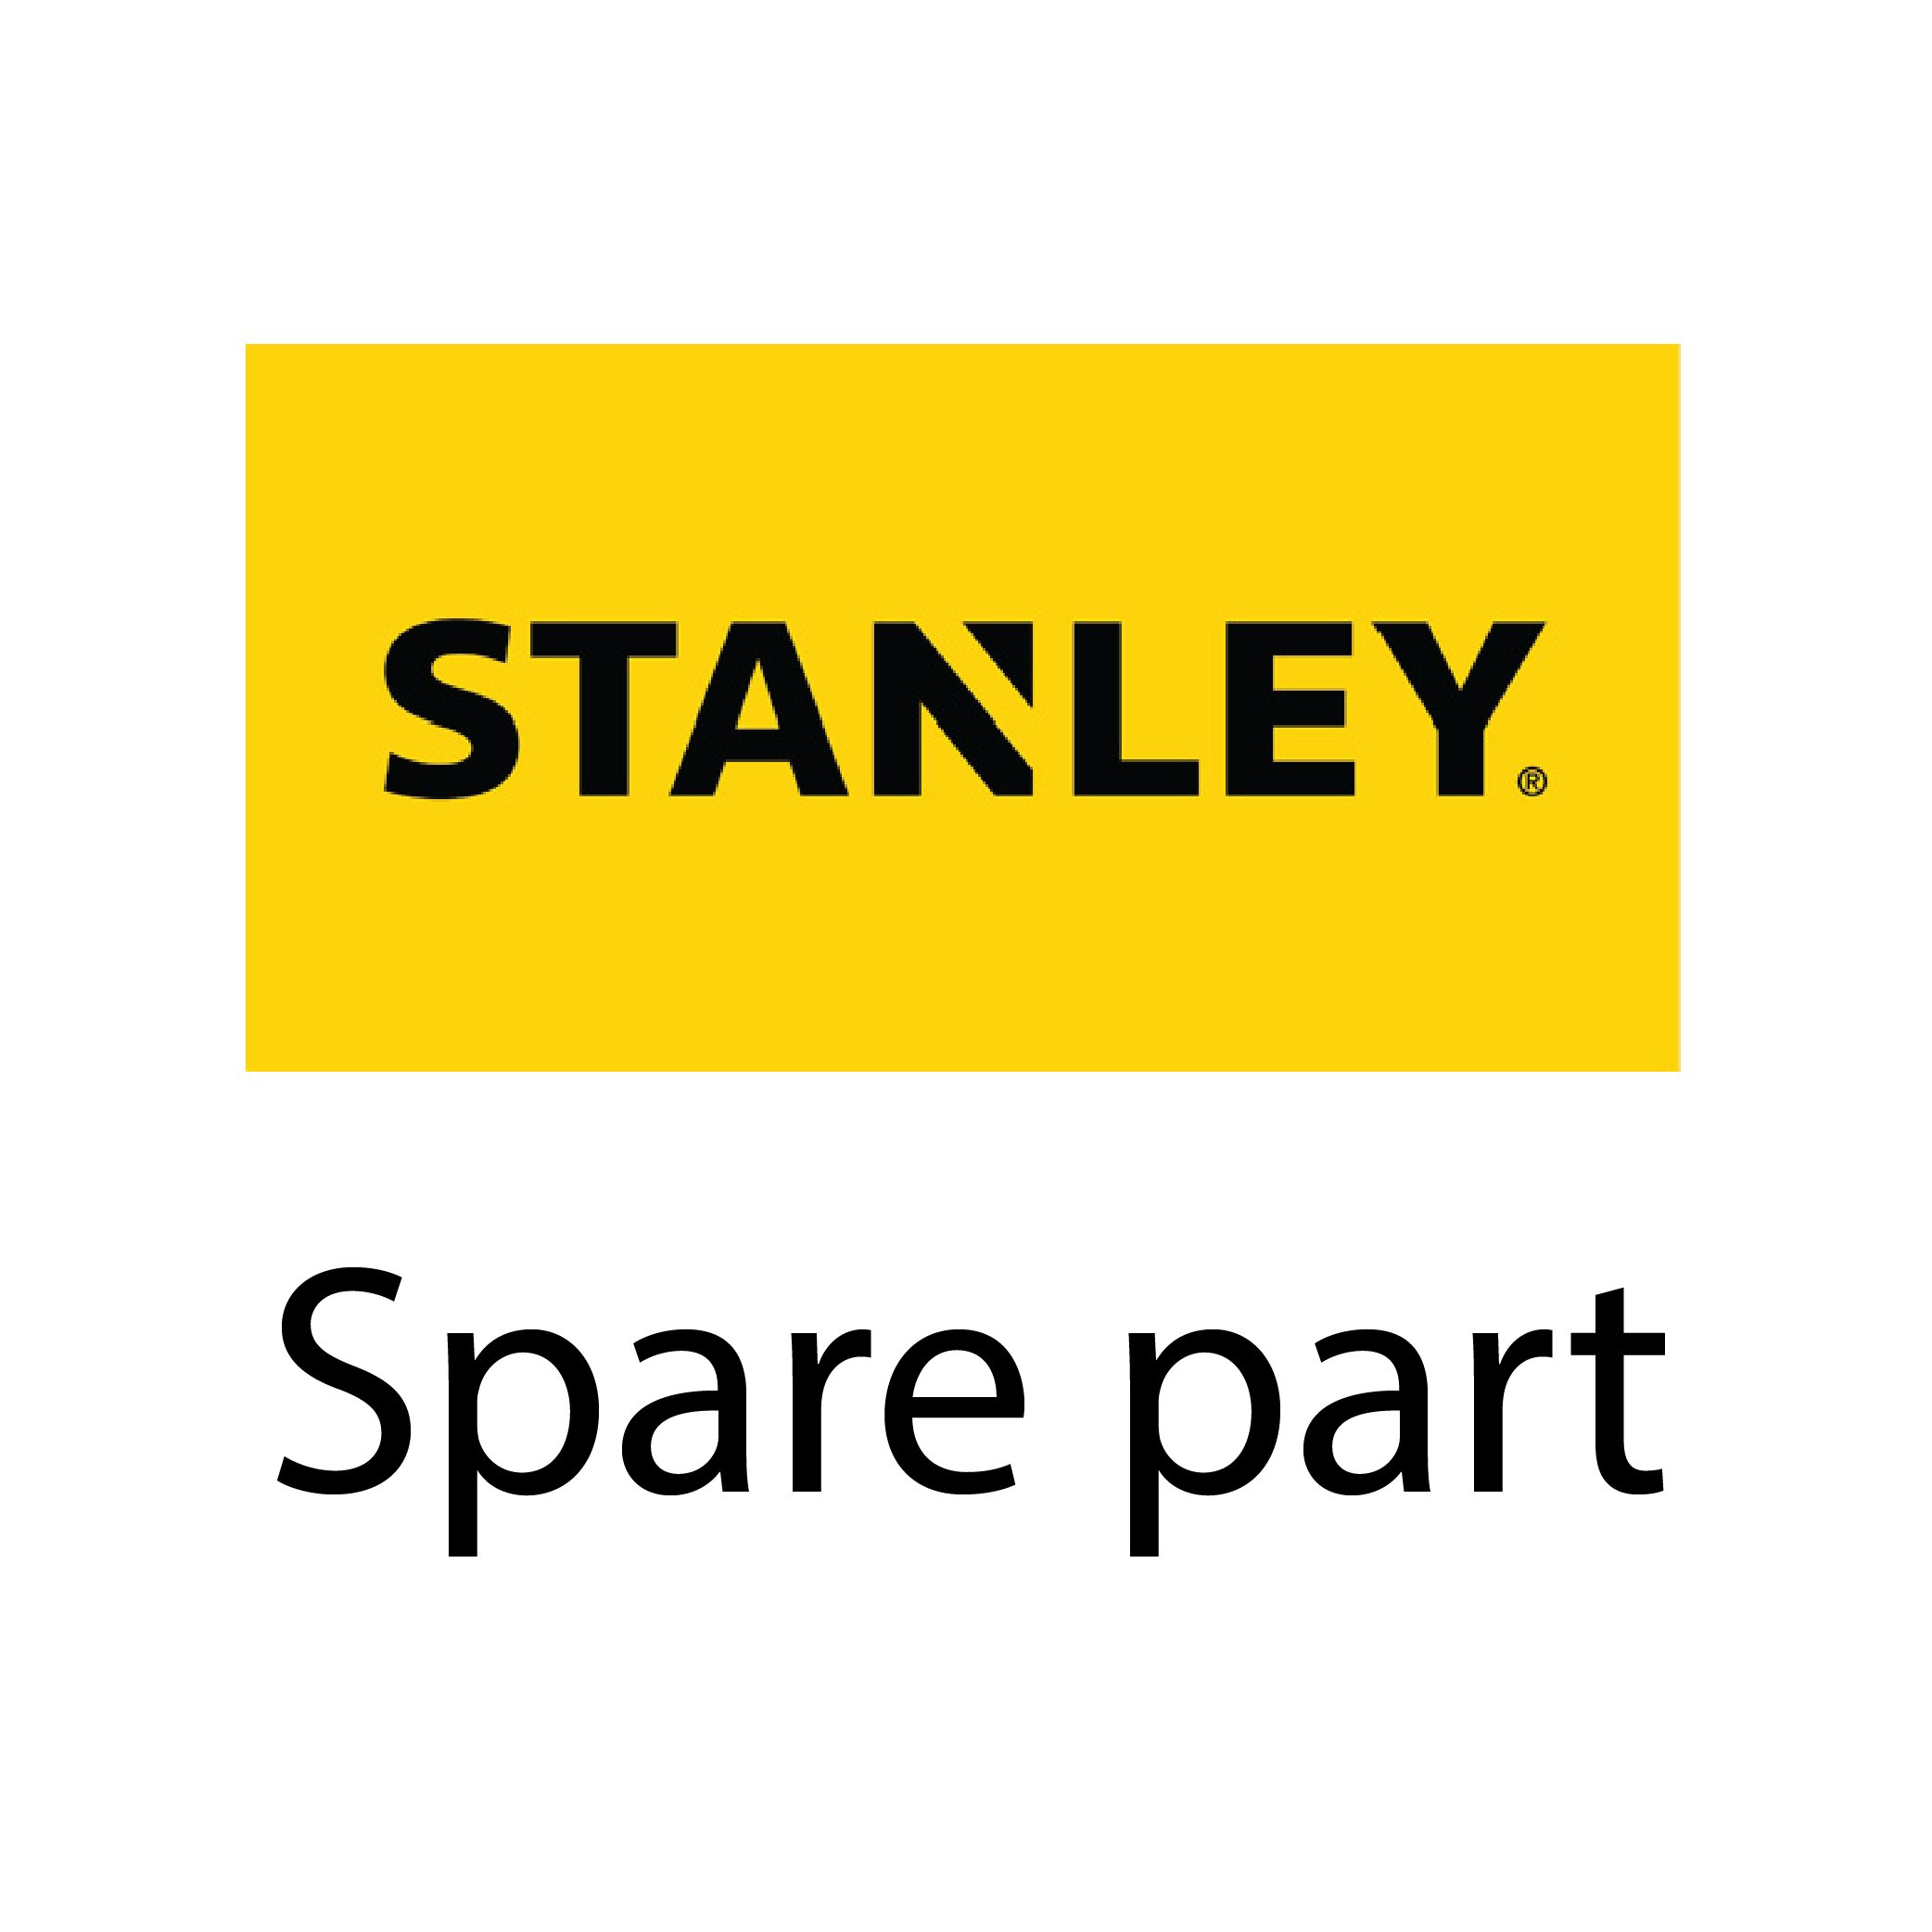 SKI - สกี จำหน่ายสินค้าหลากหลาย และคุณภาพดี | STANLEY #90547326 ทุ่น STEL141, STEL142